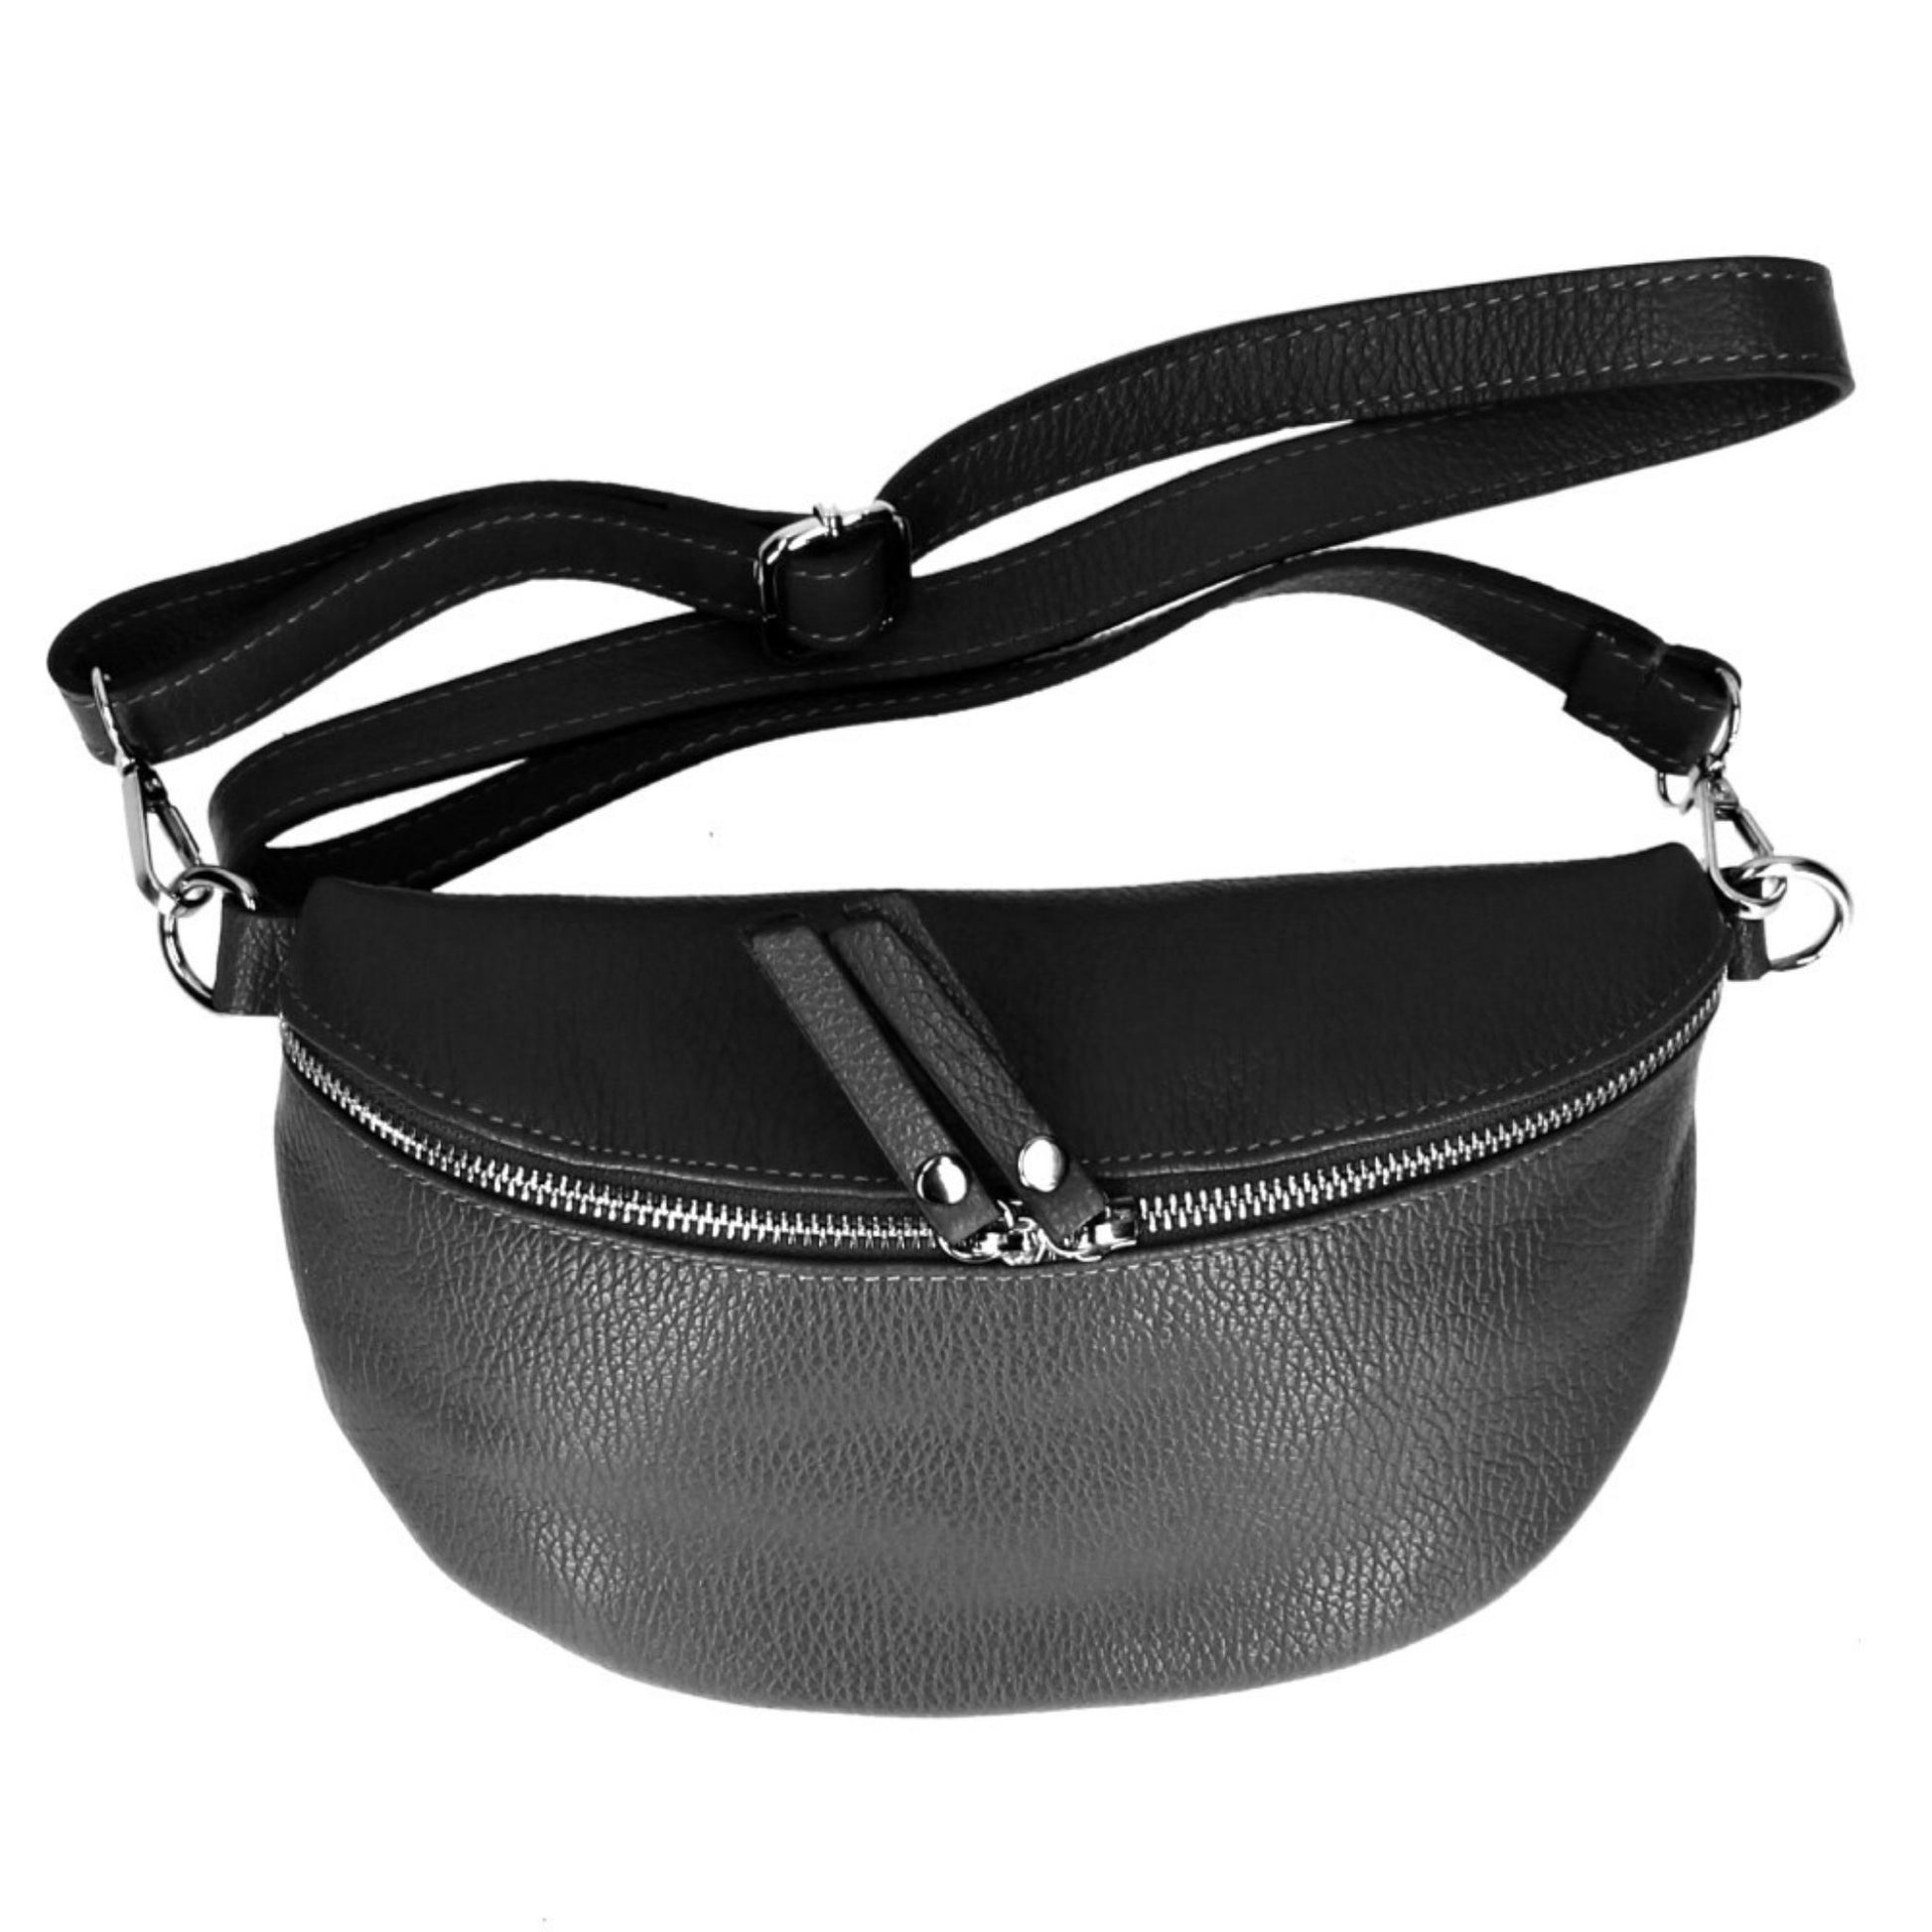 Black Leather Bum Bag